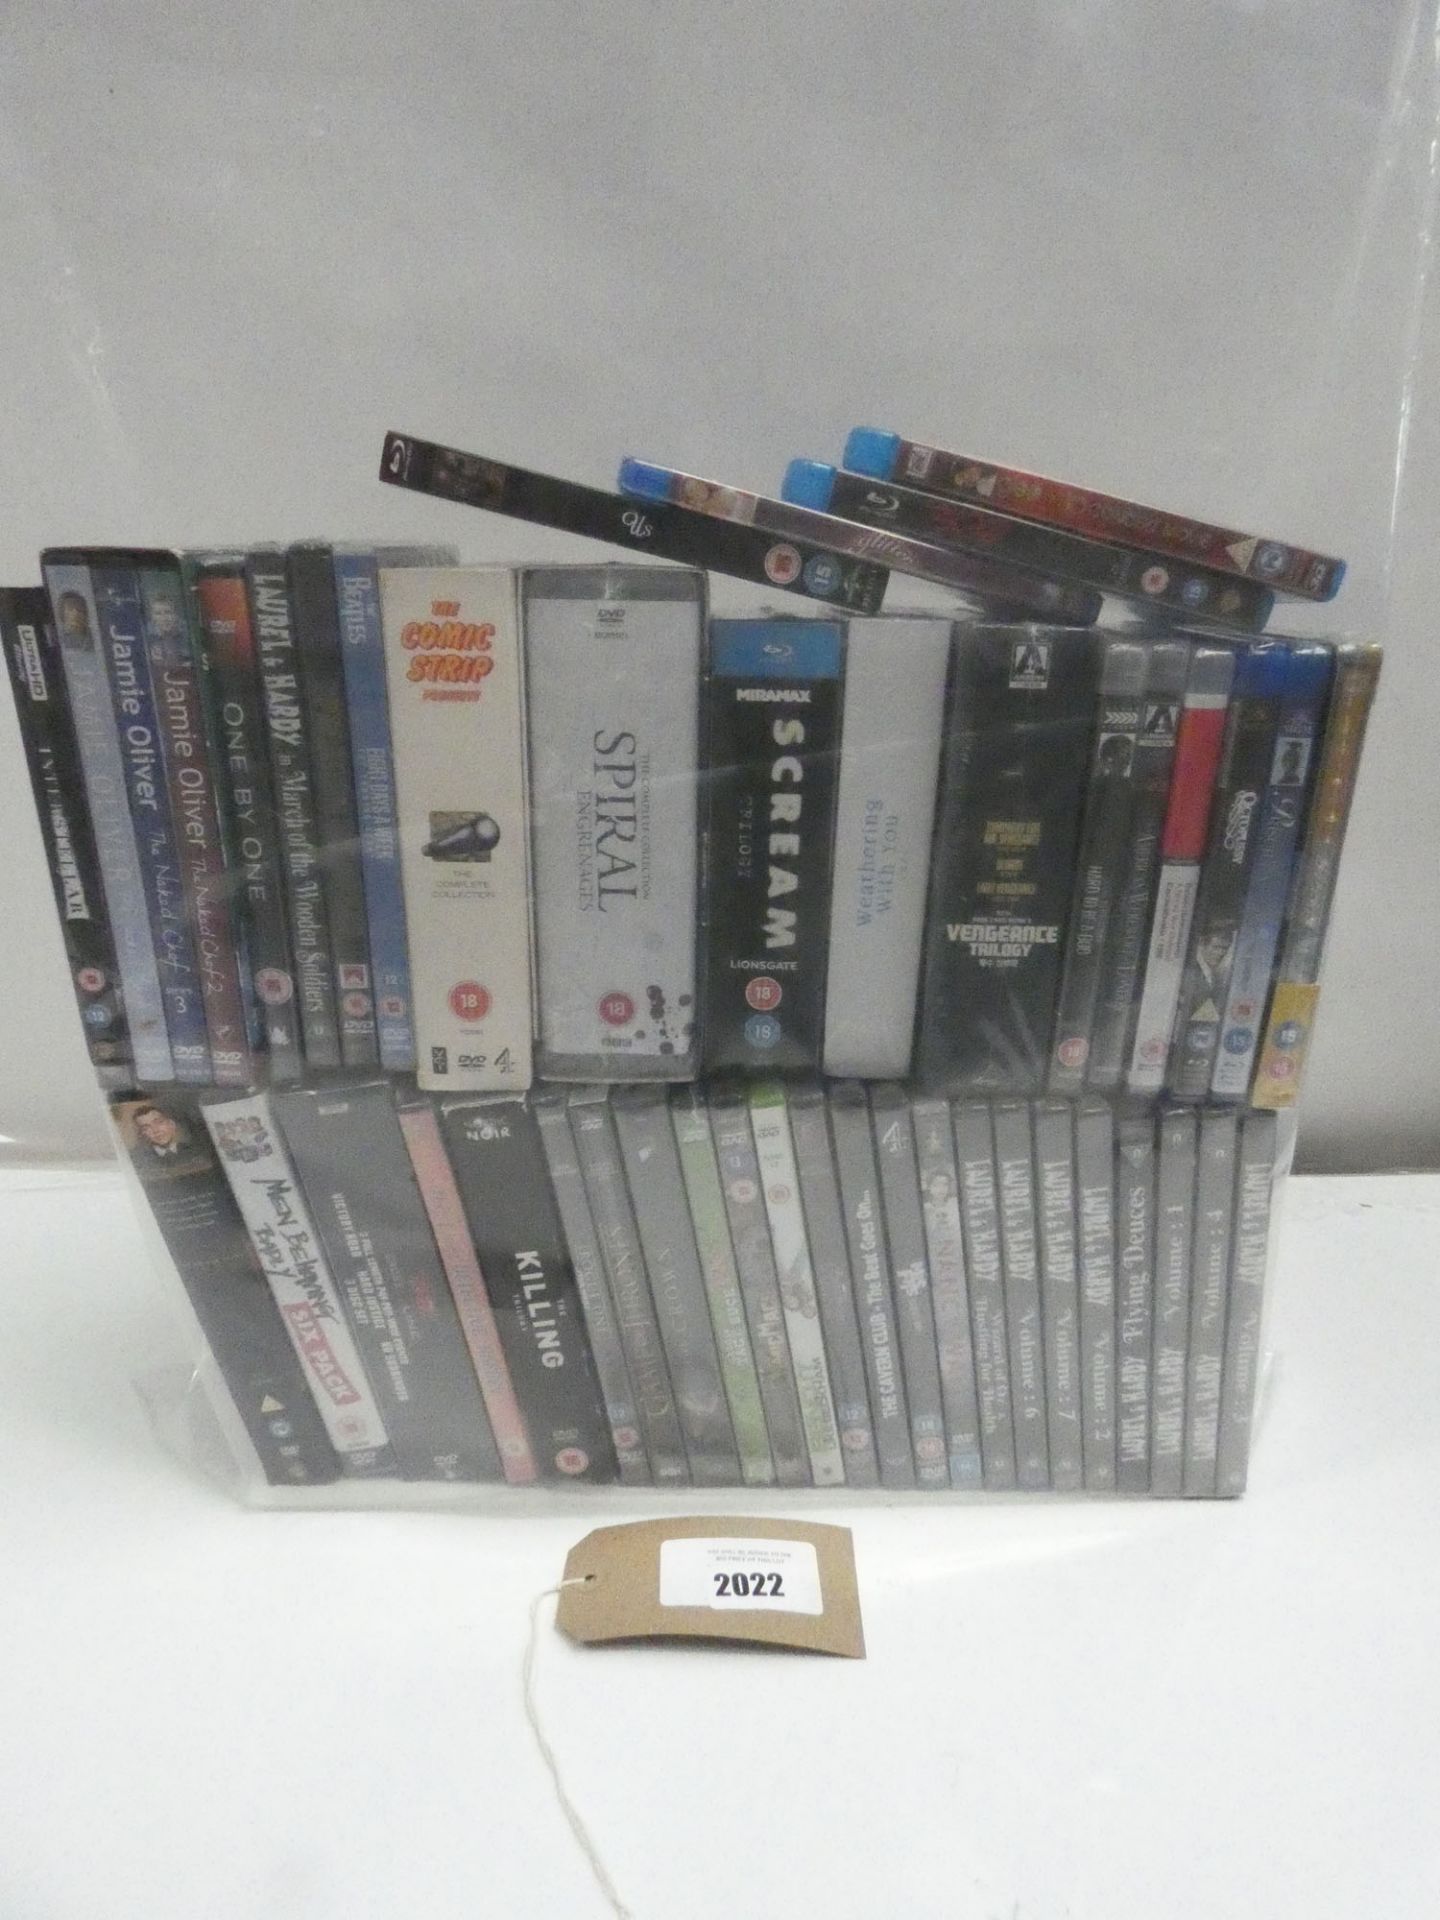 Bag containing quantity of Blu-Ray DVD films